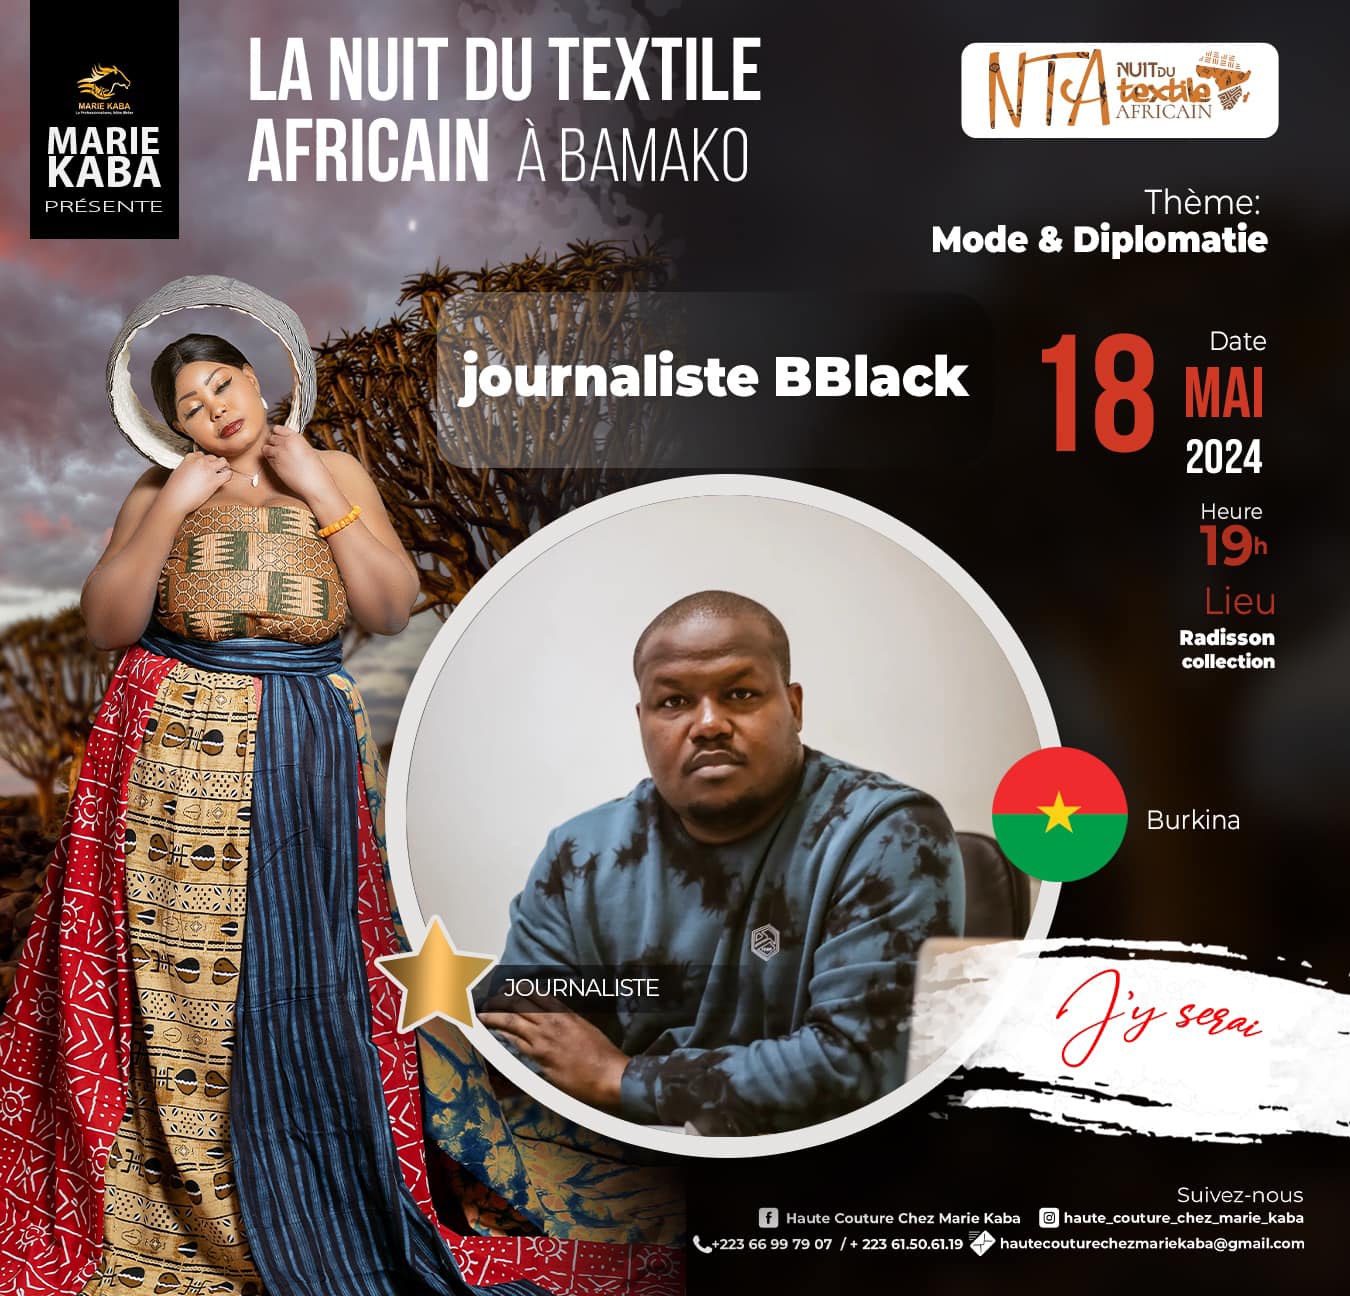 Media Partner - LA NUIT DU TEXTILE AFRICAIN A BAMAKO presents BBLACK - Journalist from Burkina